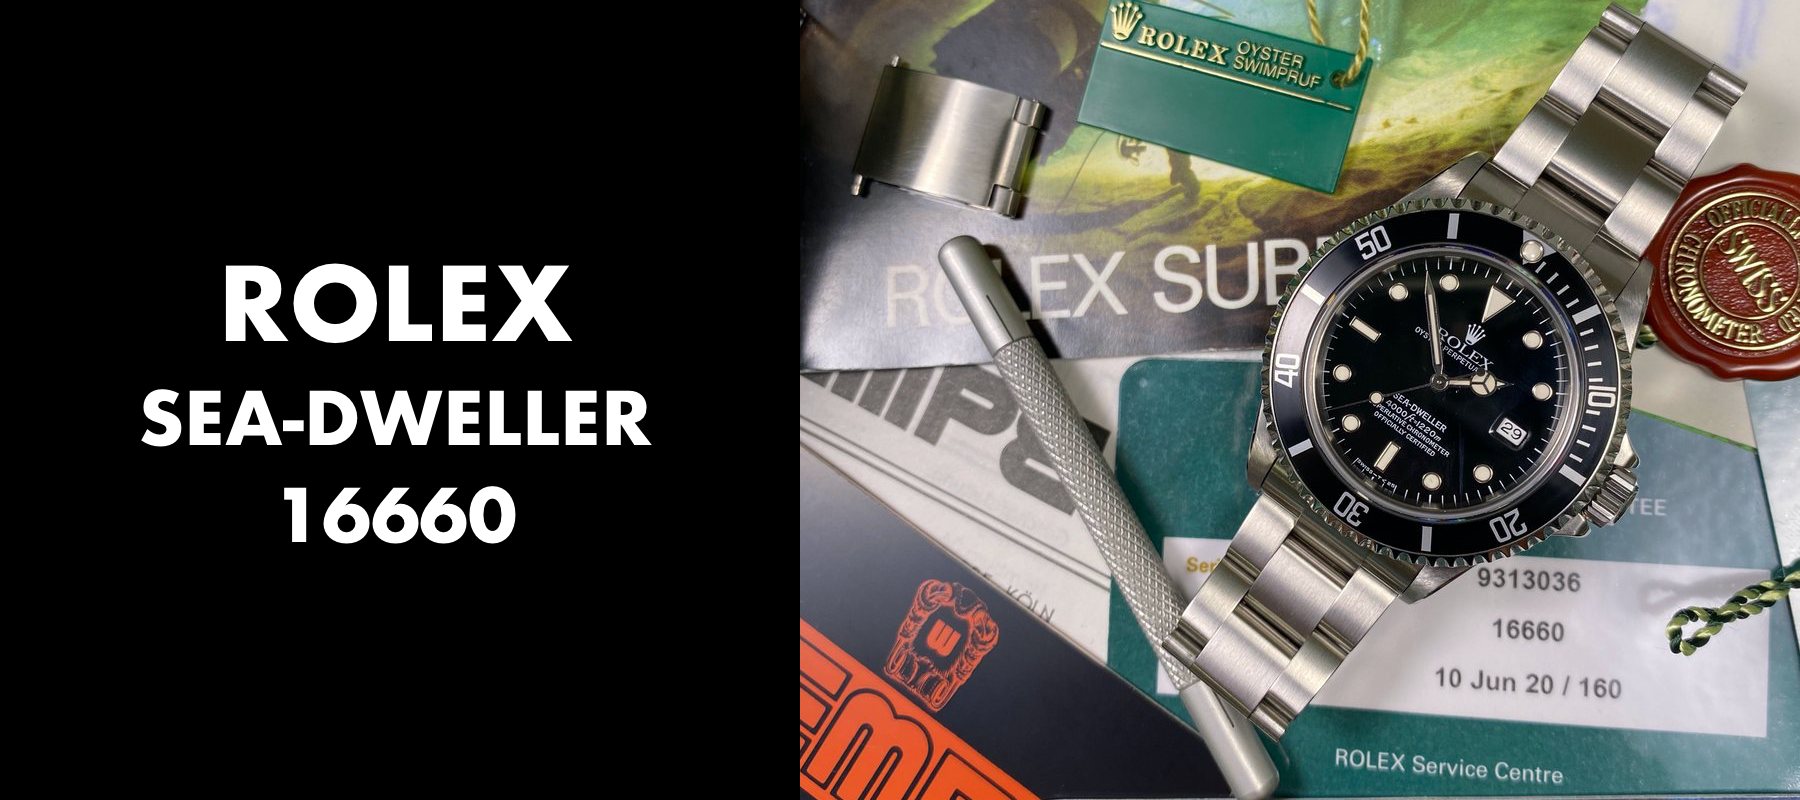 Rolex Sea-Dweller 16660 - History